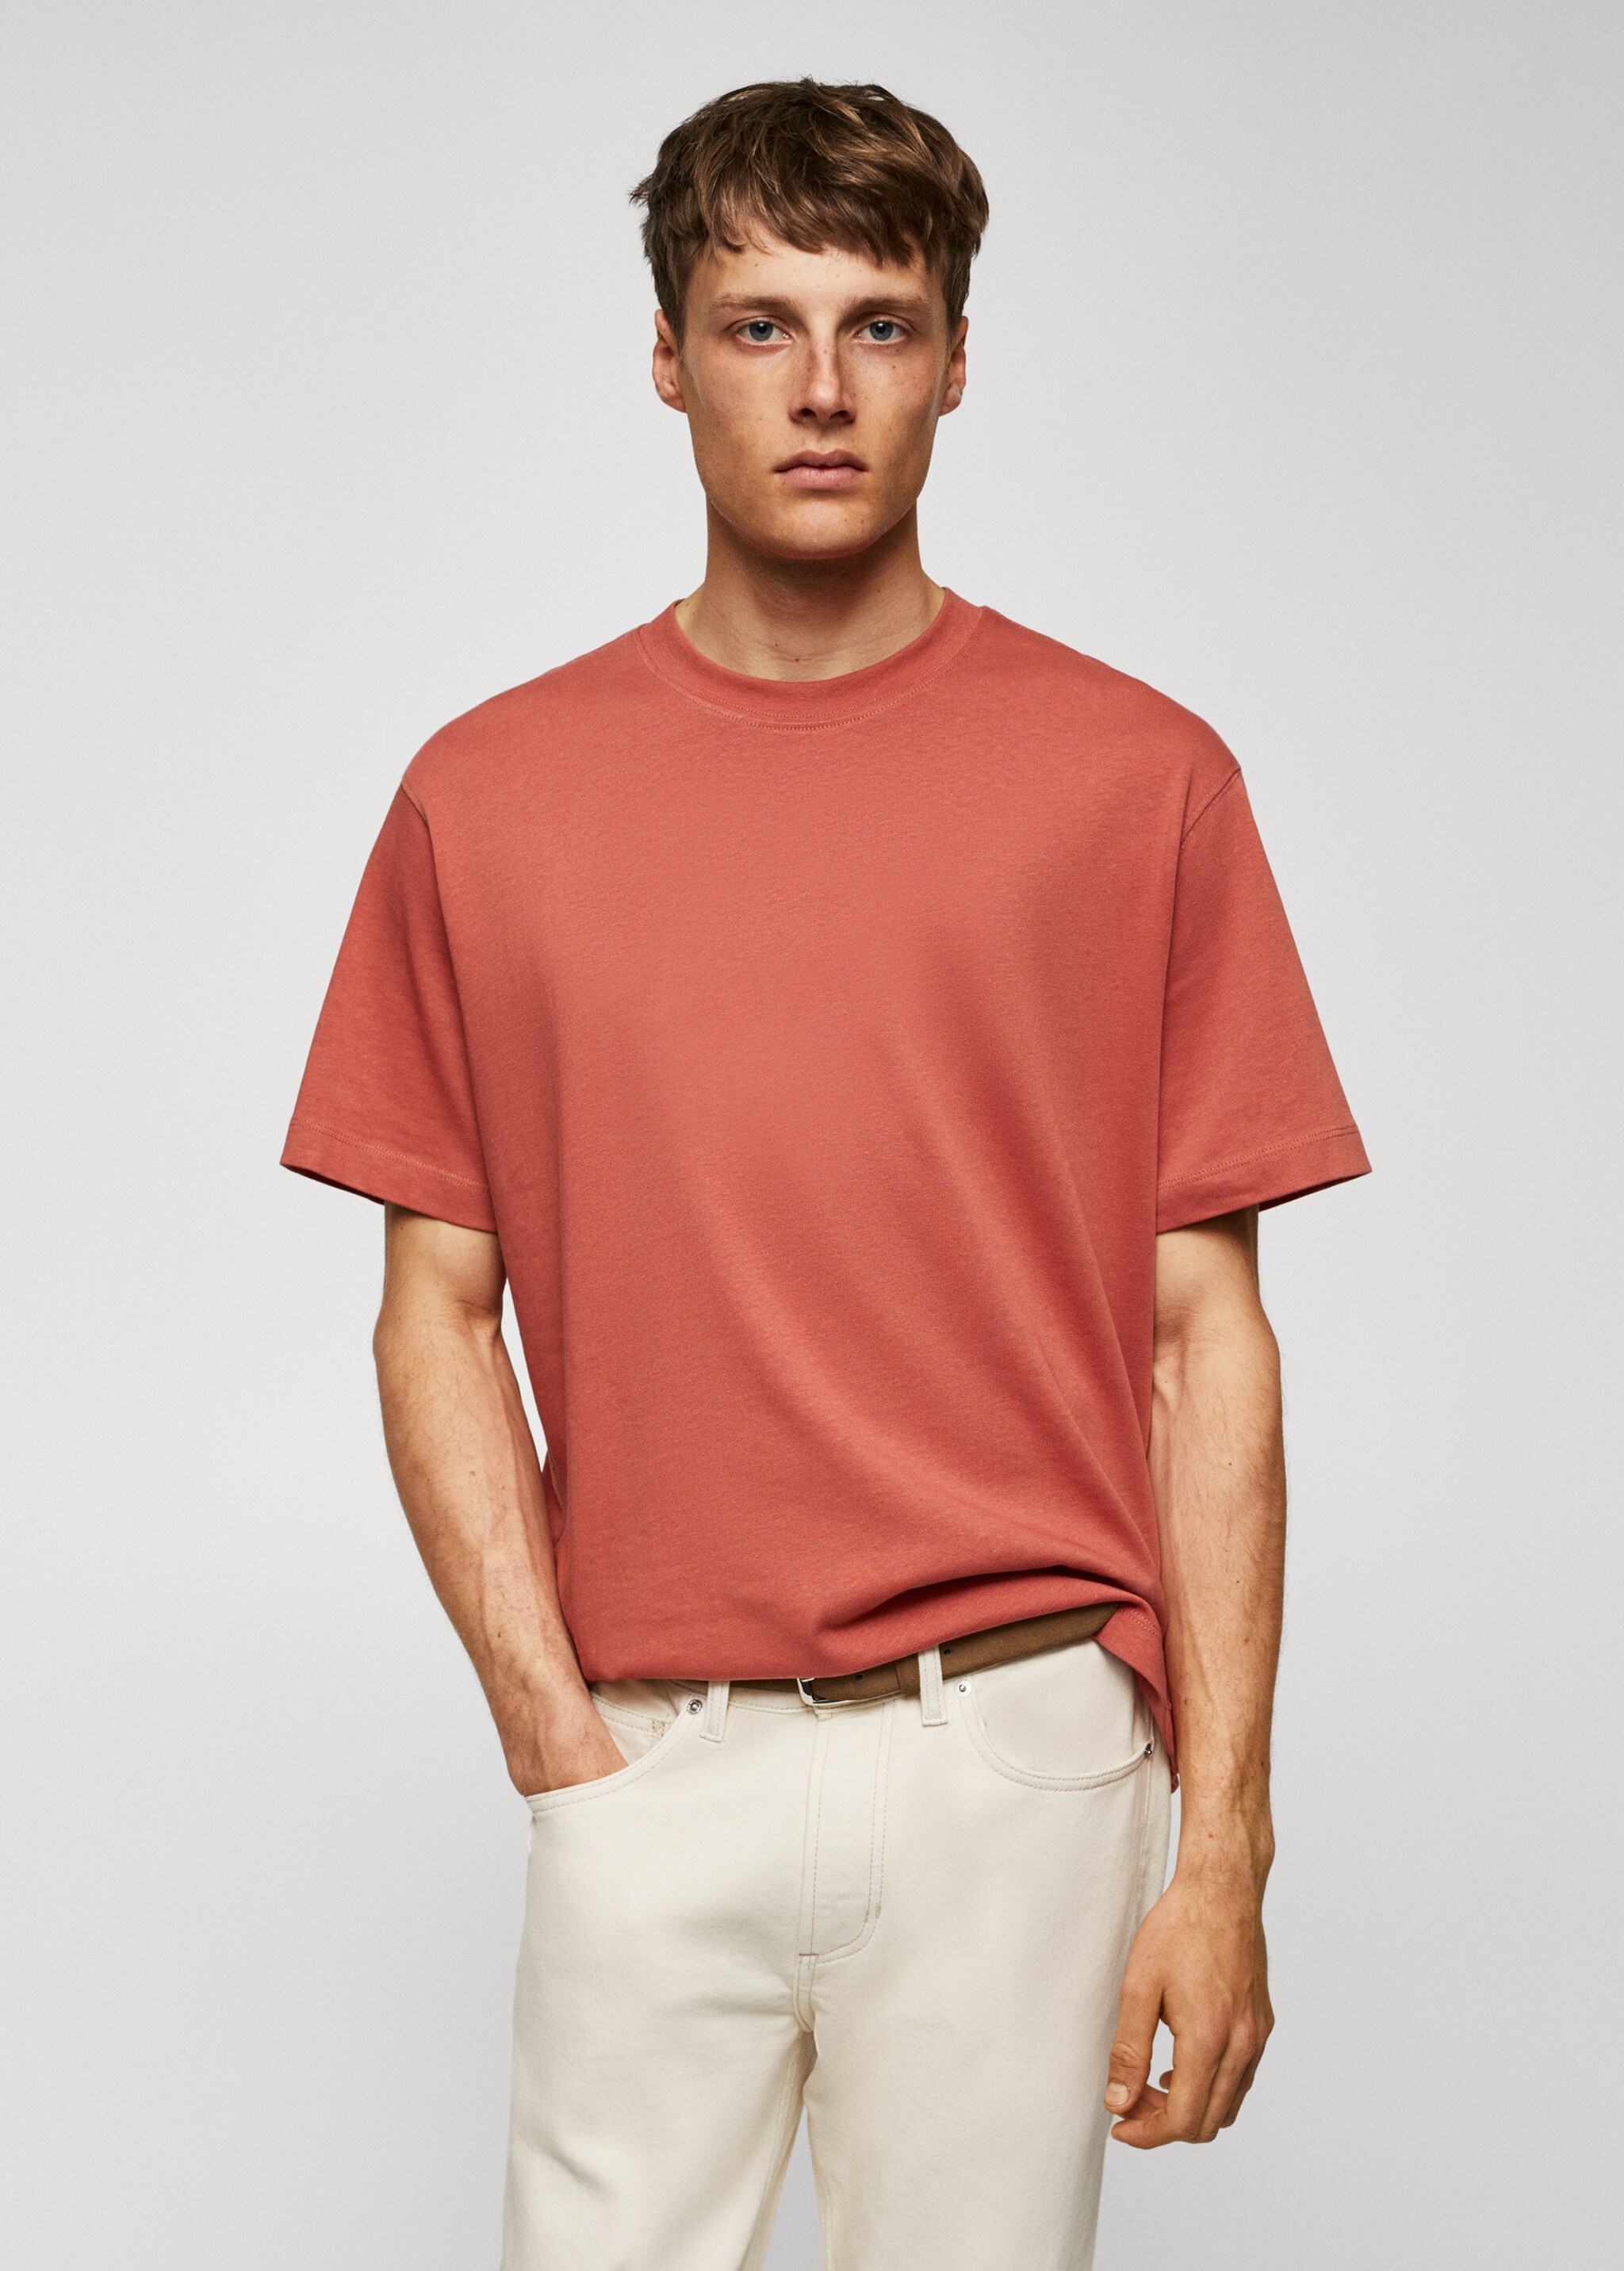 Camiseta básica 100% algodón relaxed fit - Plano medio